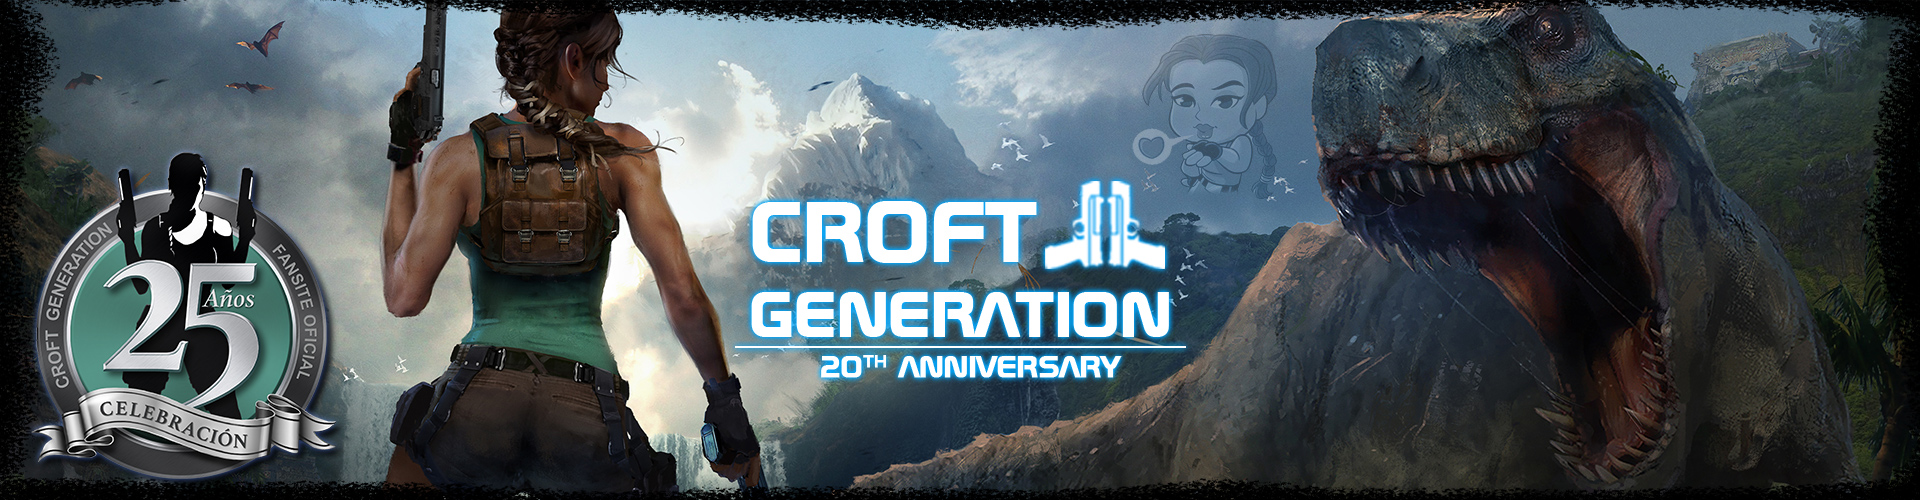 Croft Generation 20 Aniversario